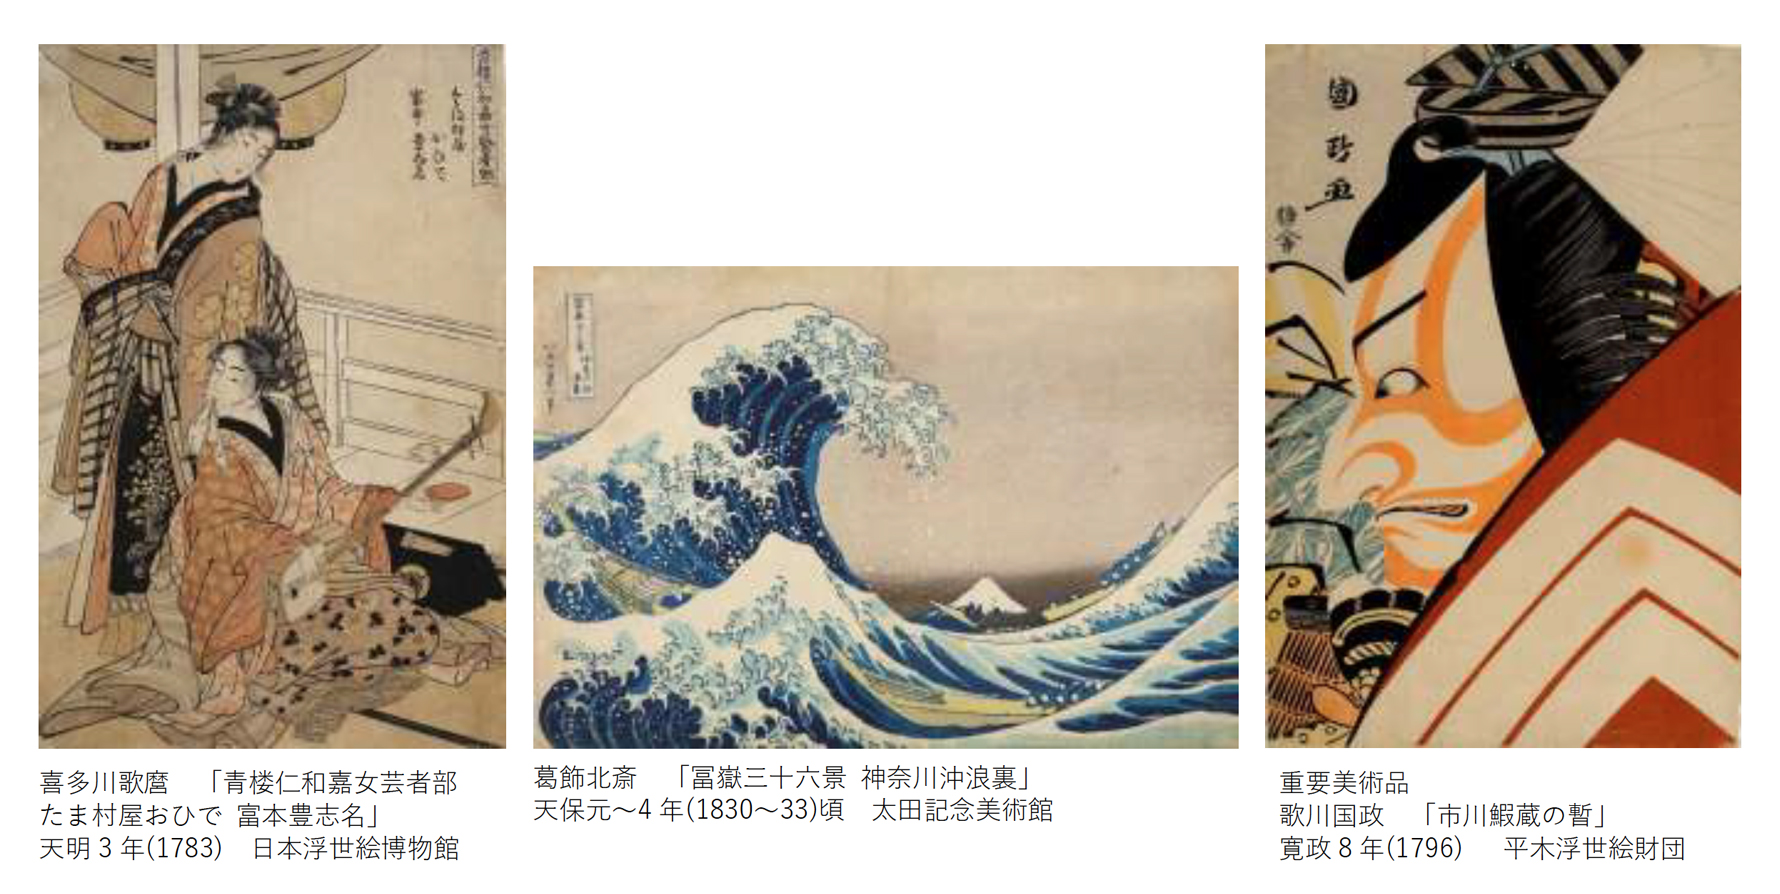 The Ukiyo E 日本三大浮世絵コレクション 日本経済新聞社のプレスリリース